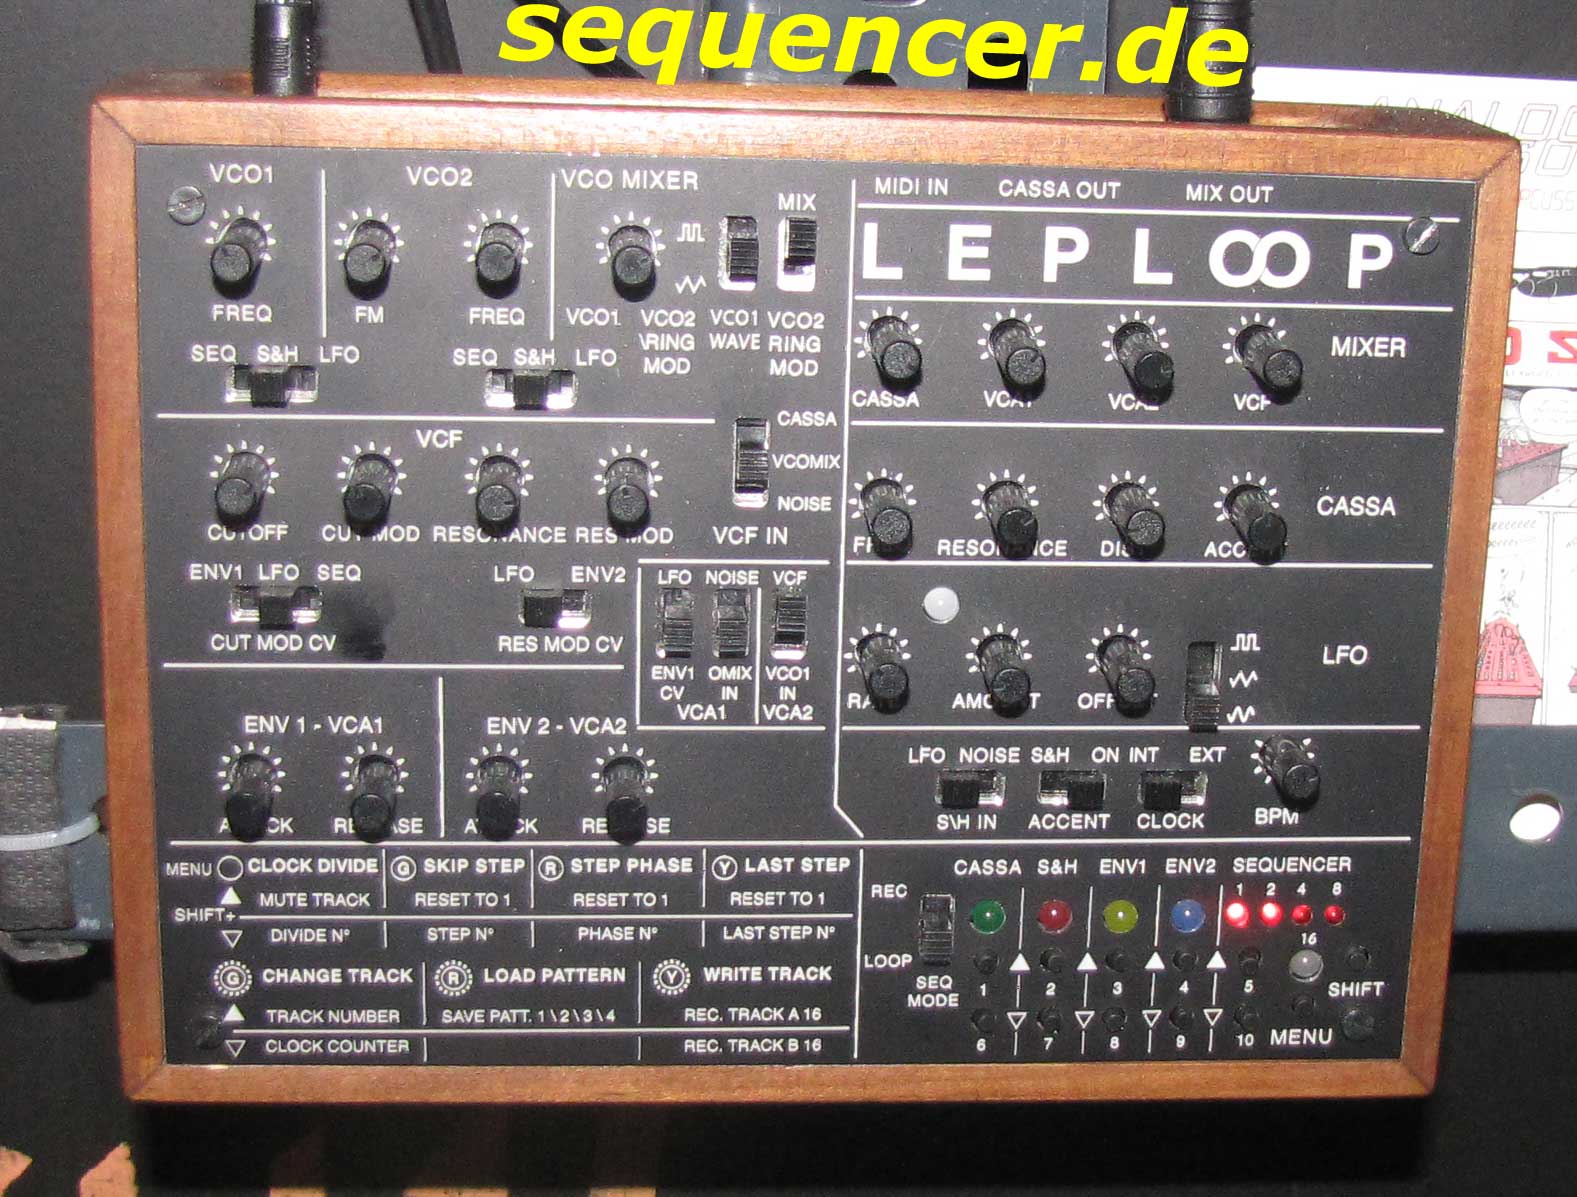 LEP Leploop synthesizer